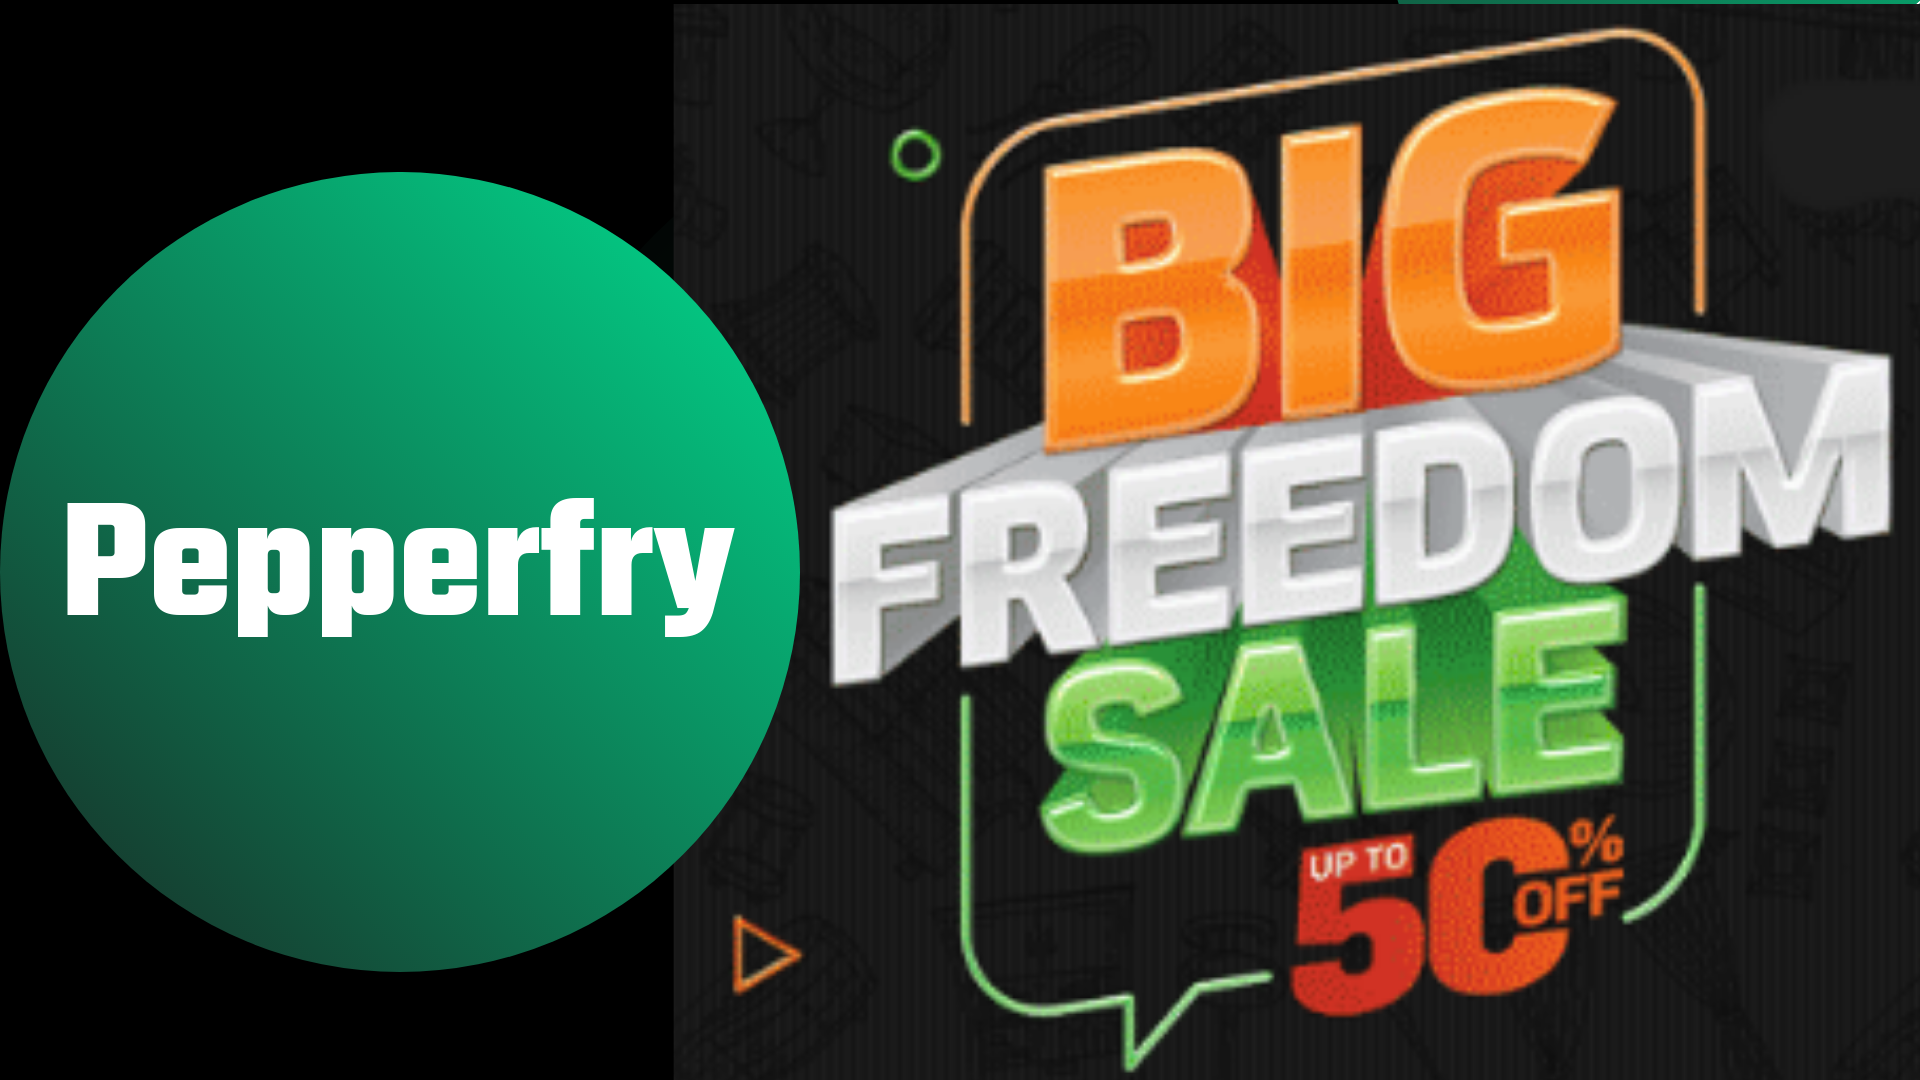 pepperfry-big-freedom-sale-2019